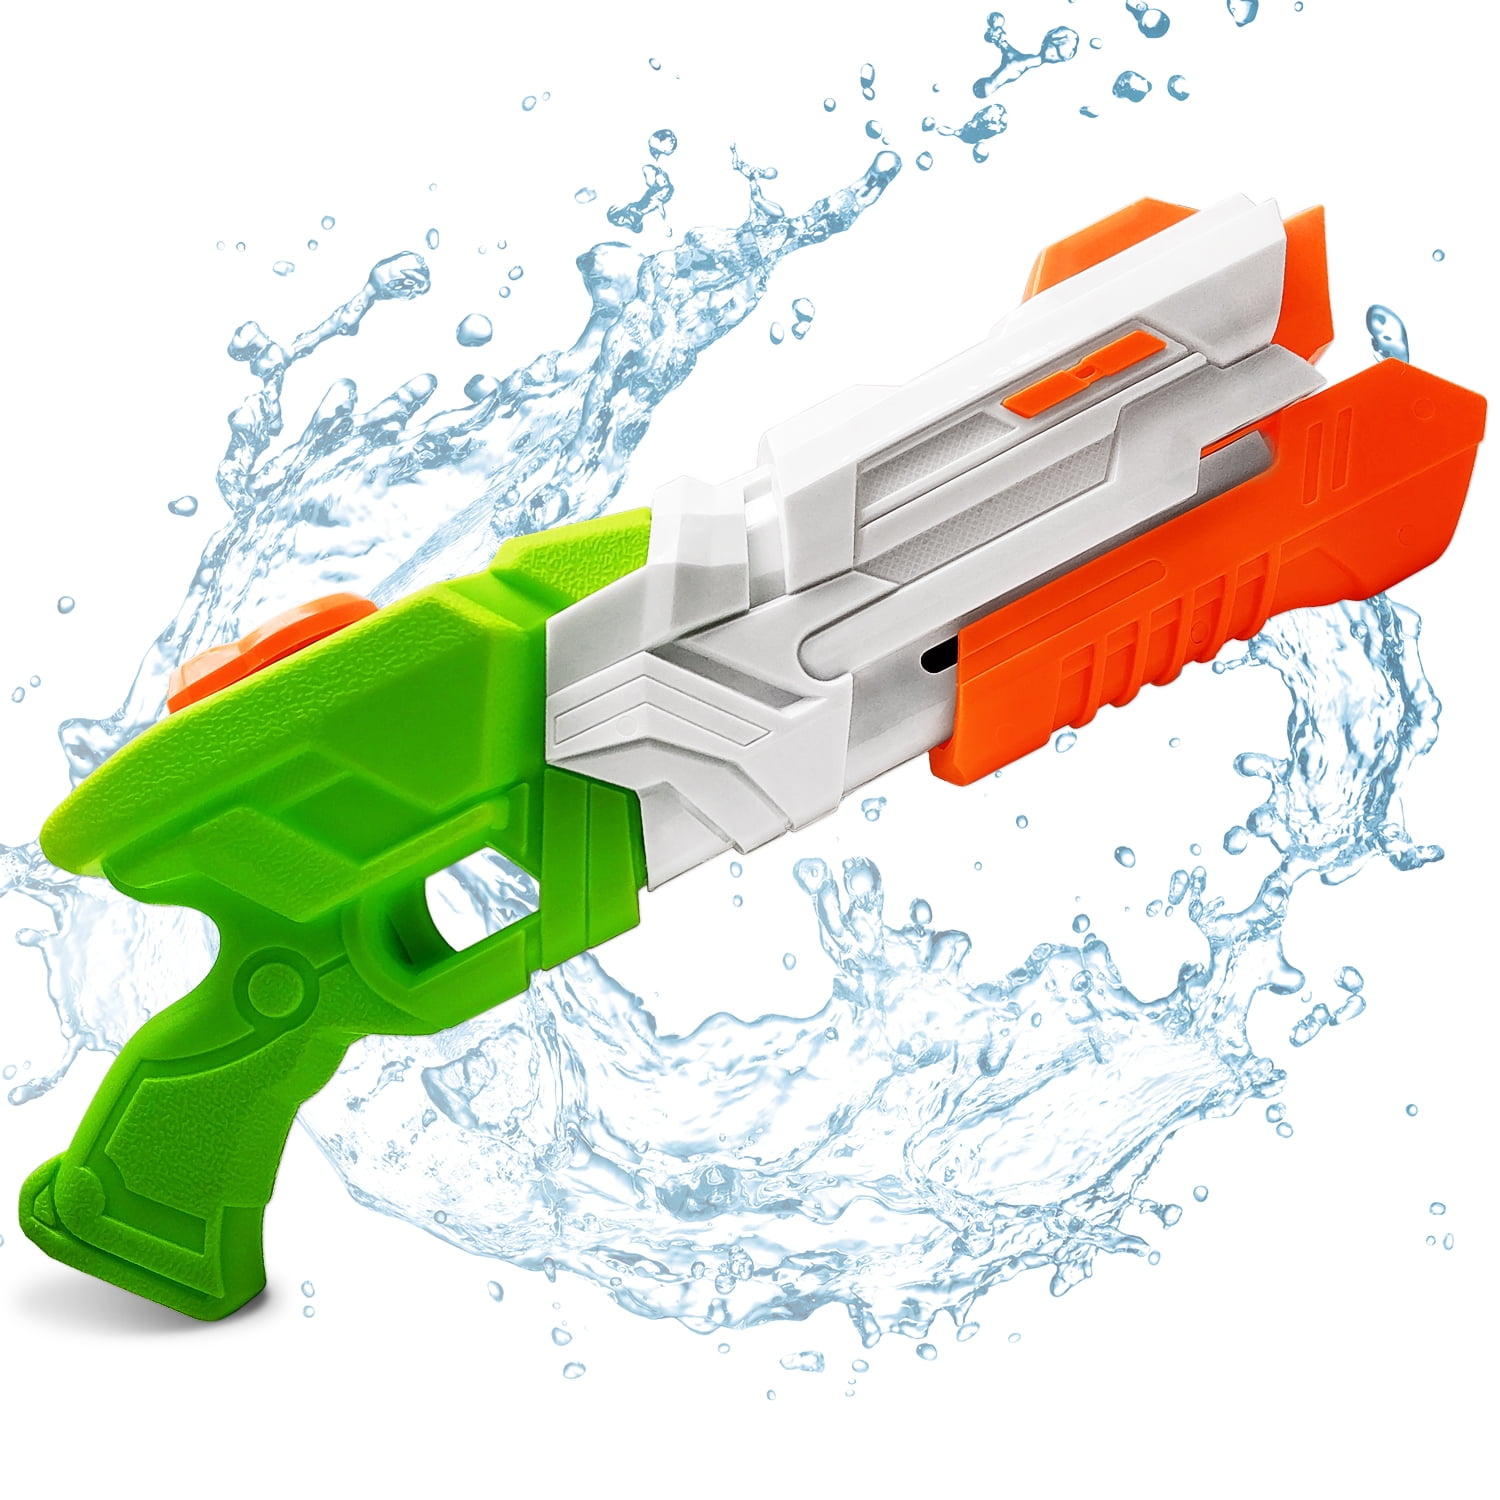 Water Pistol Guns Blaster Squirter Summer Outdoor Beach Garden Game Safe Toy ed 